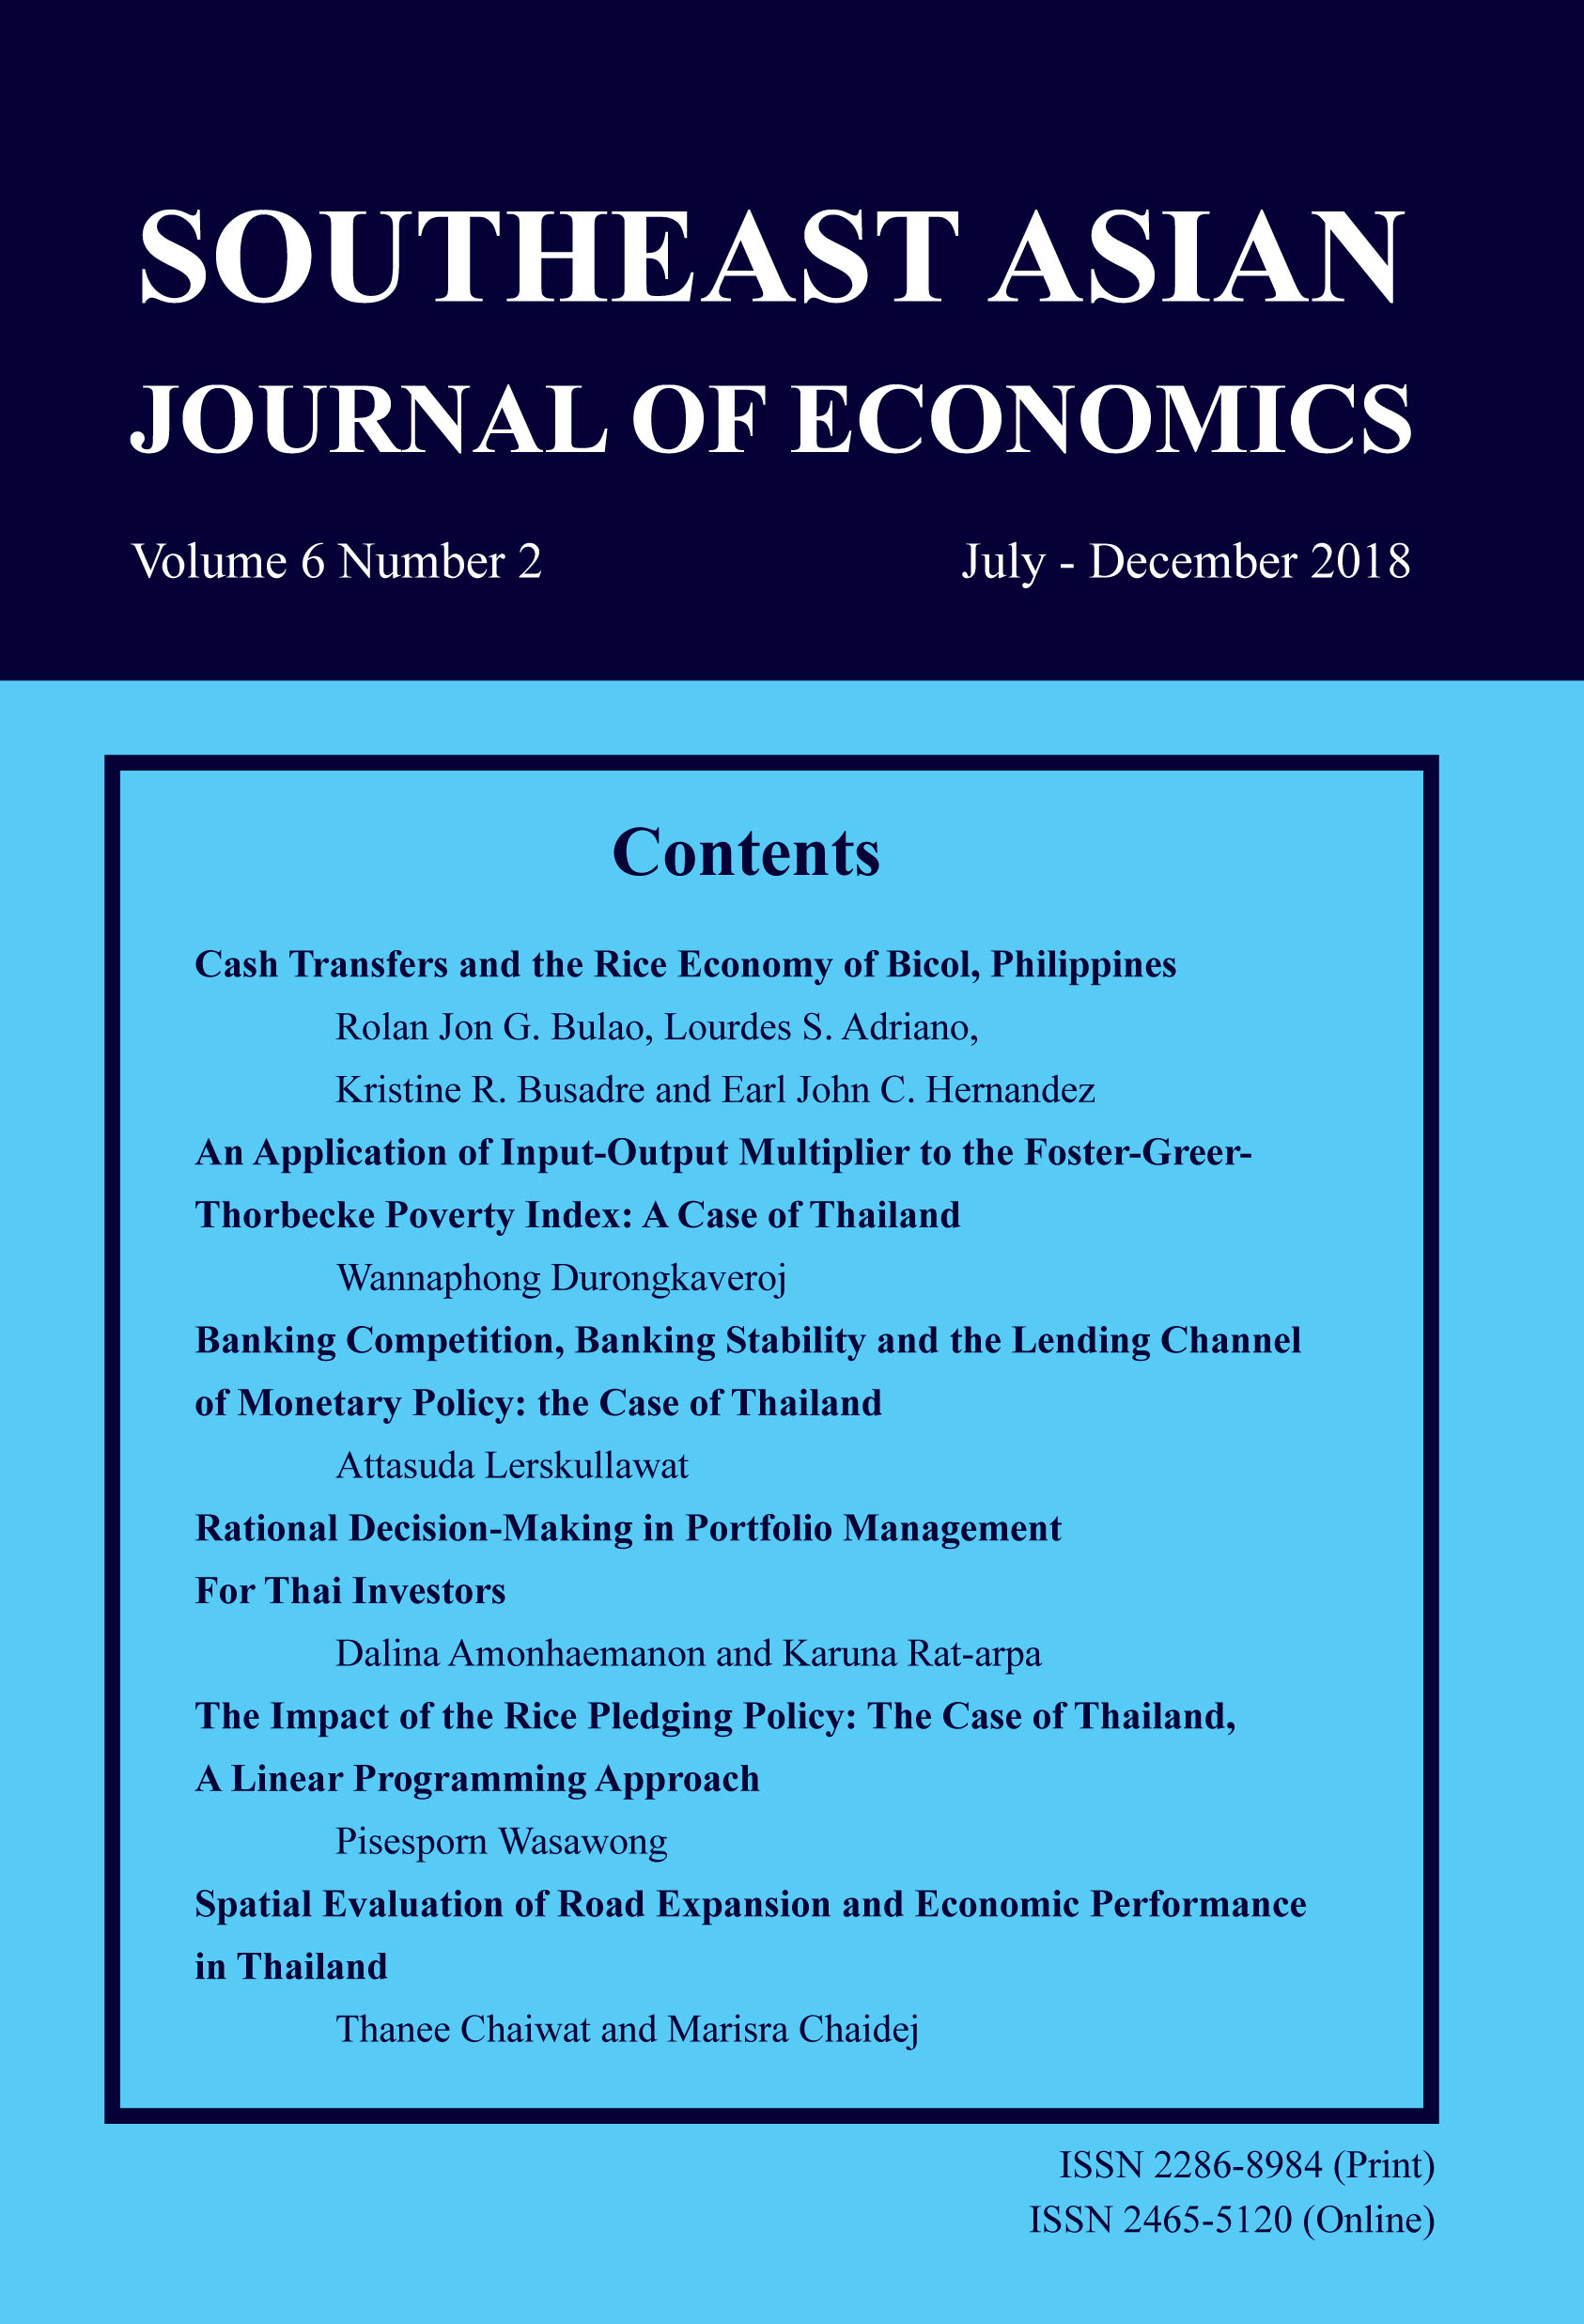 					View Southeast Asian Journal of Economics, Vol. 4  No. 1 (January - June 2016)
				